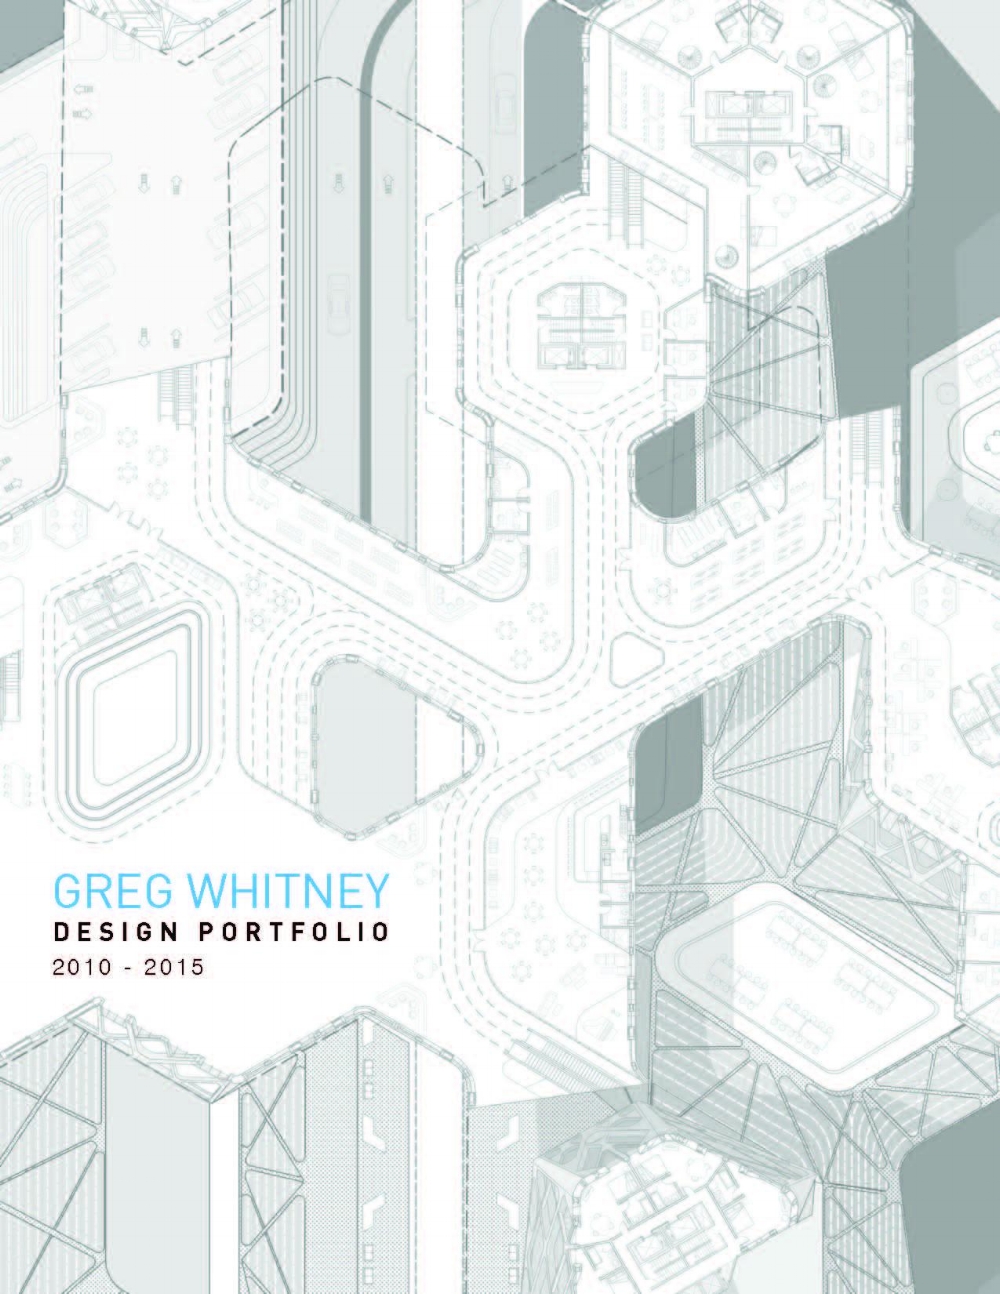 10 Outstanding Architecture Portfolio Example Covers